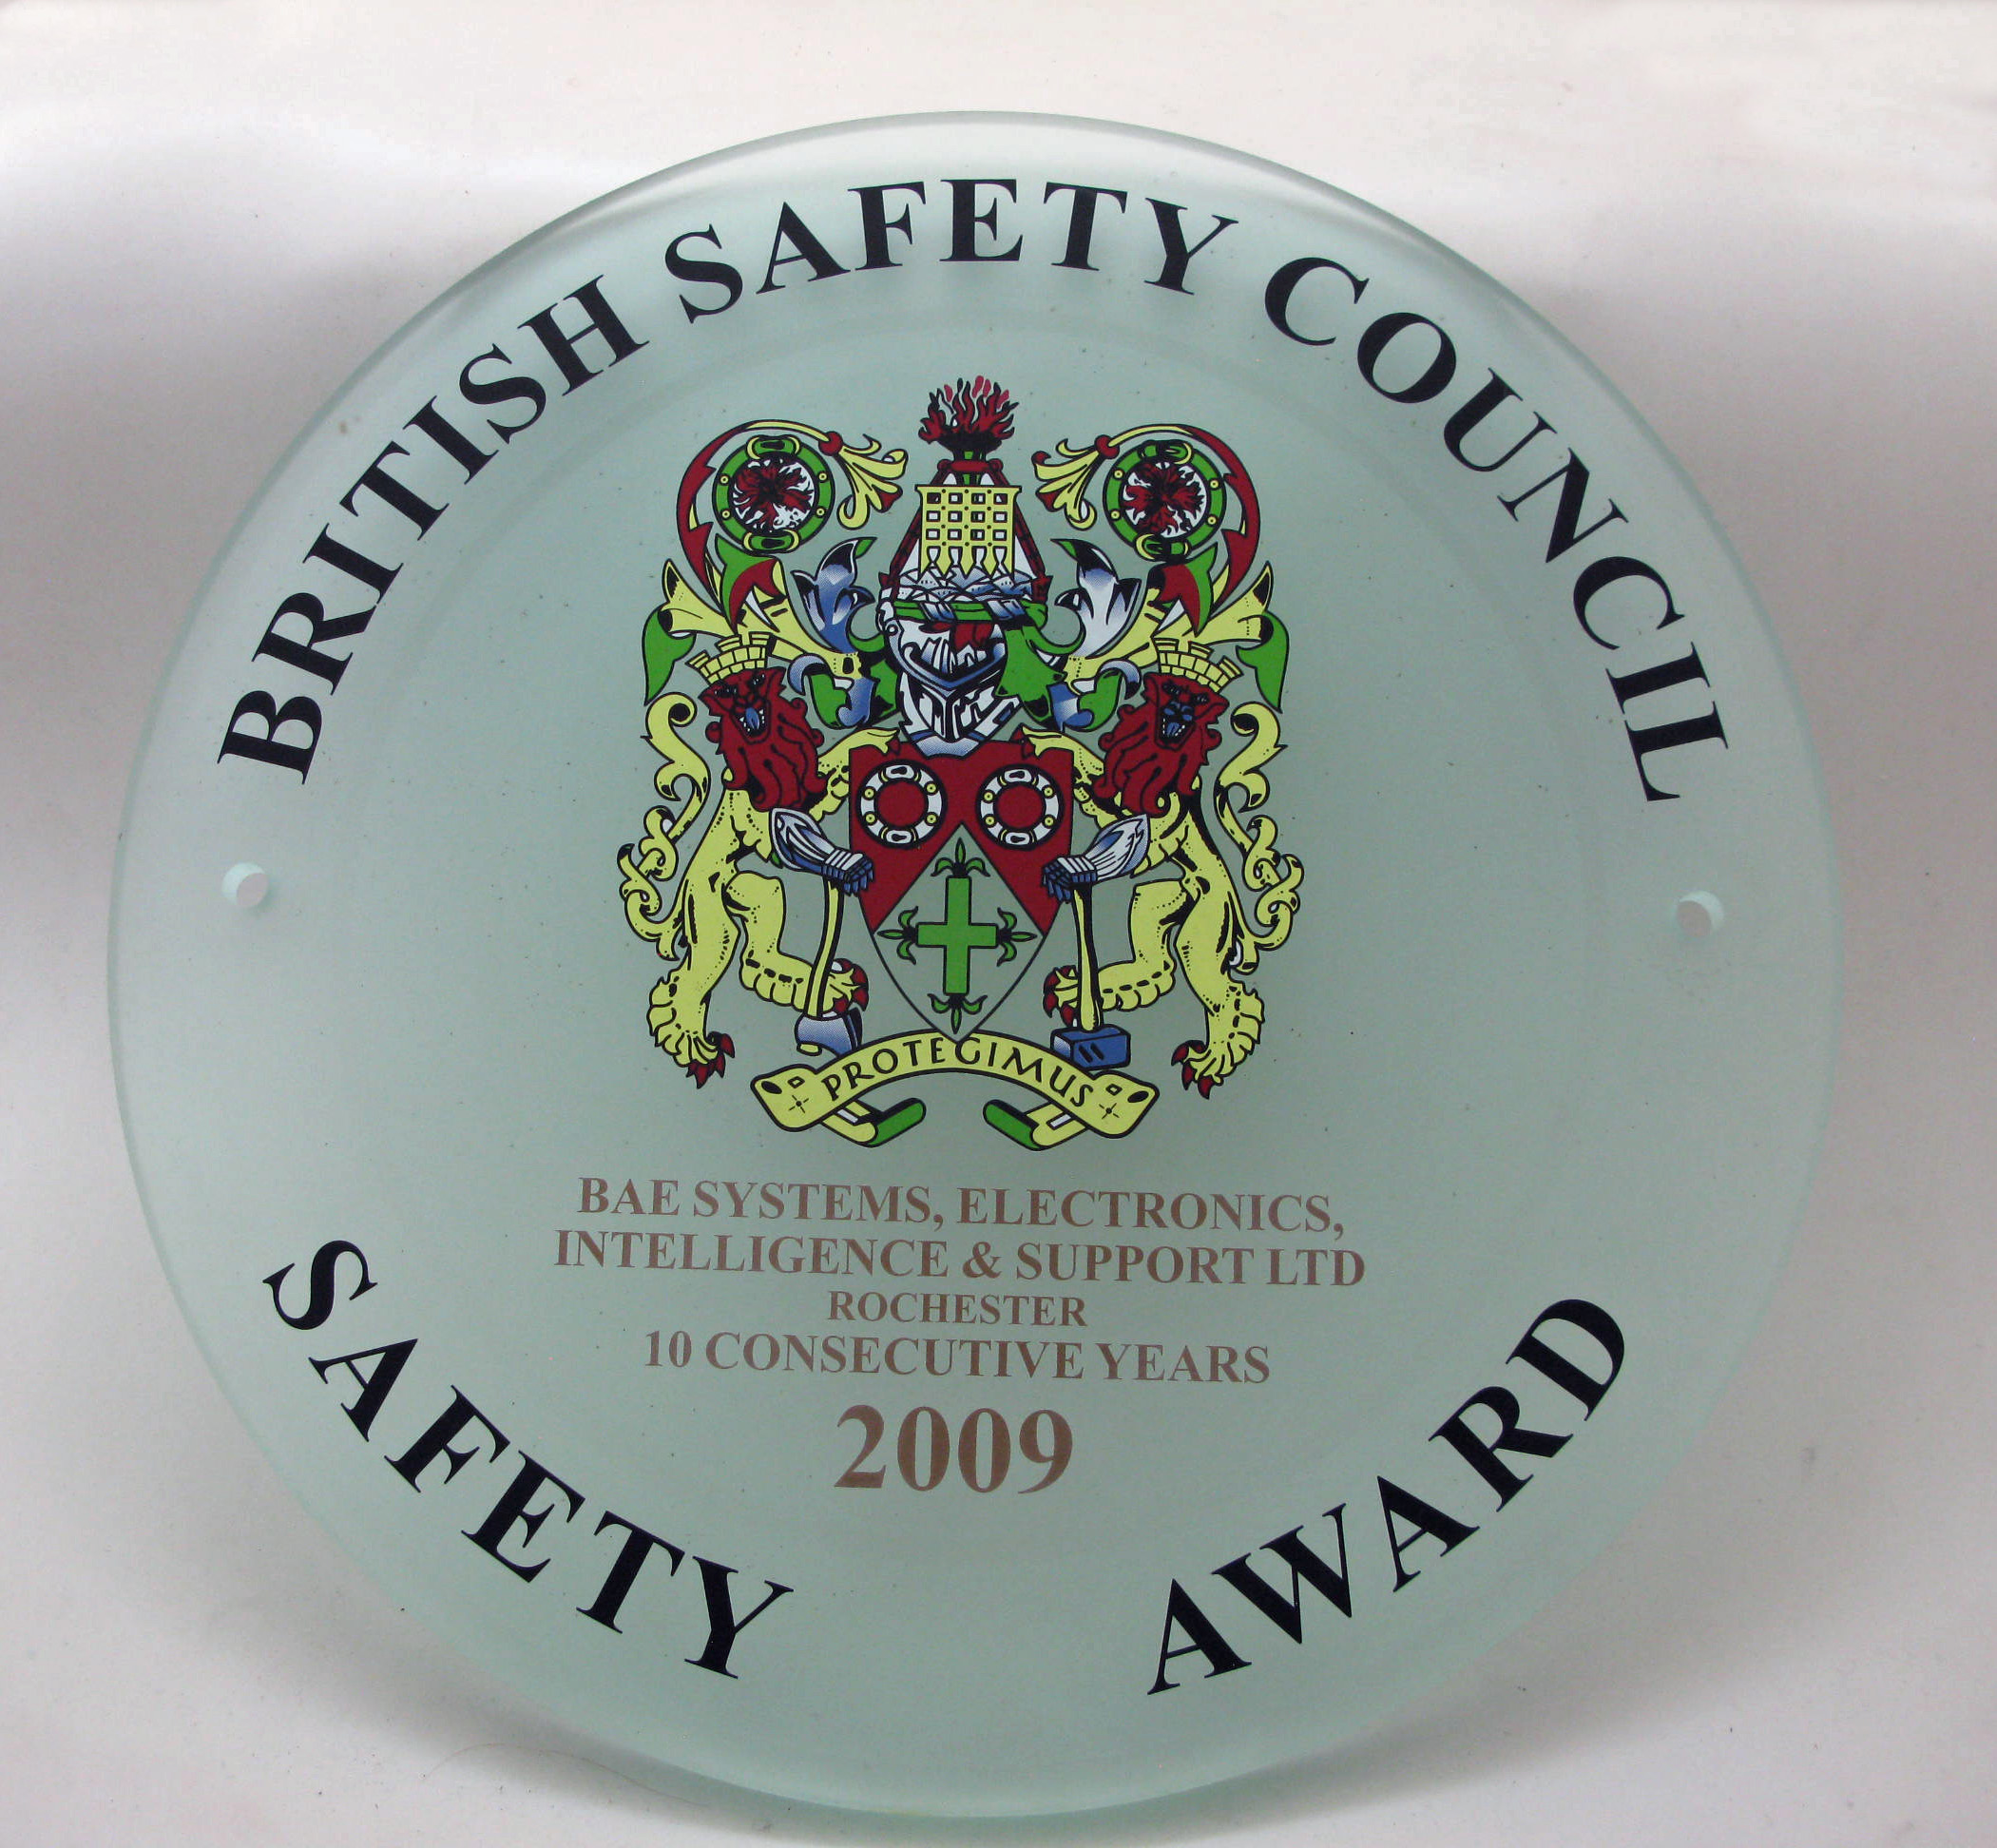 2009 Safety Award Plaque